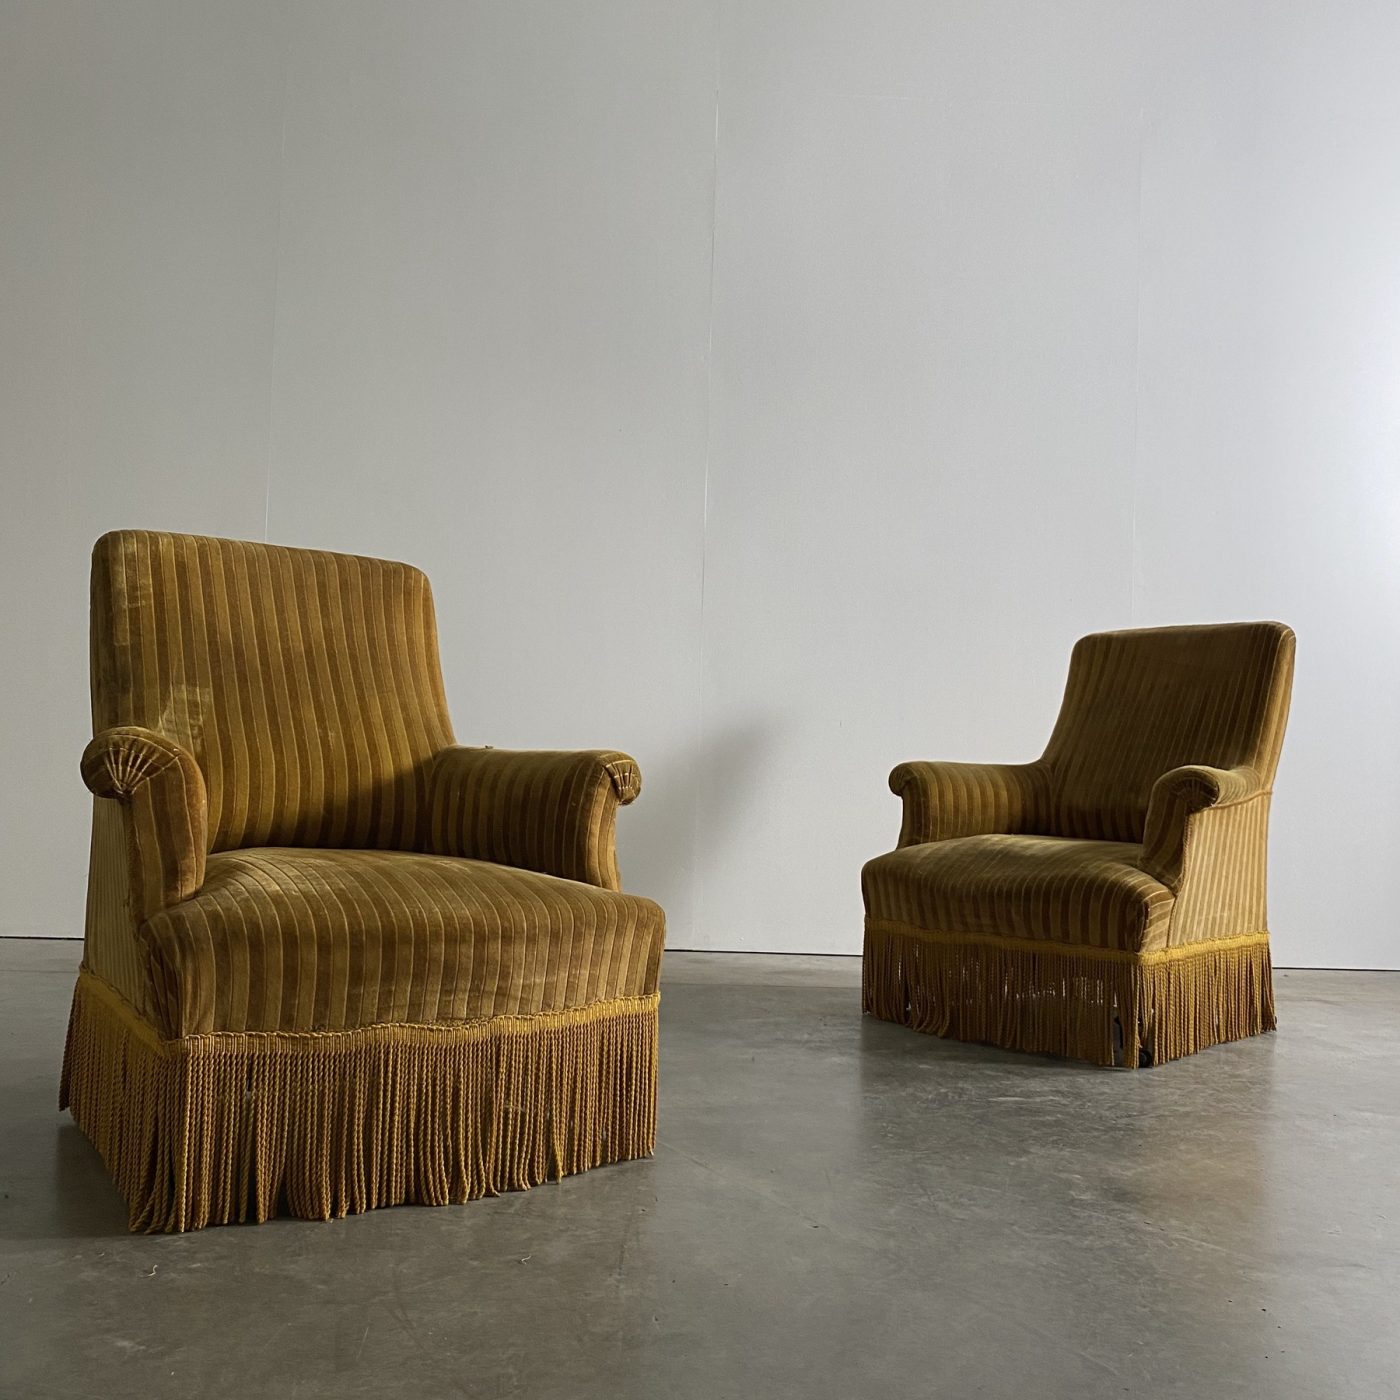 objet-vagabond-napoleon-chairs0002